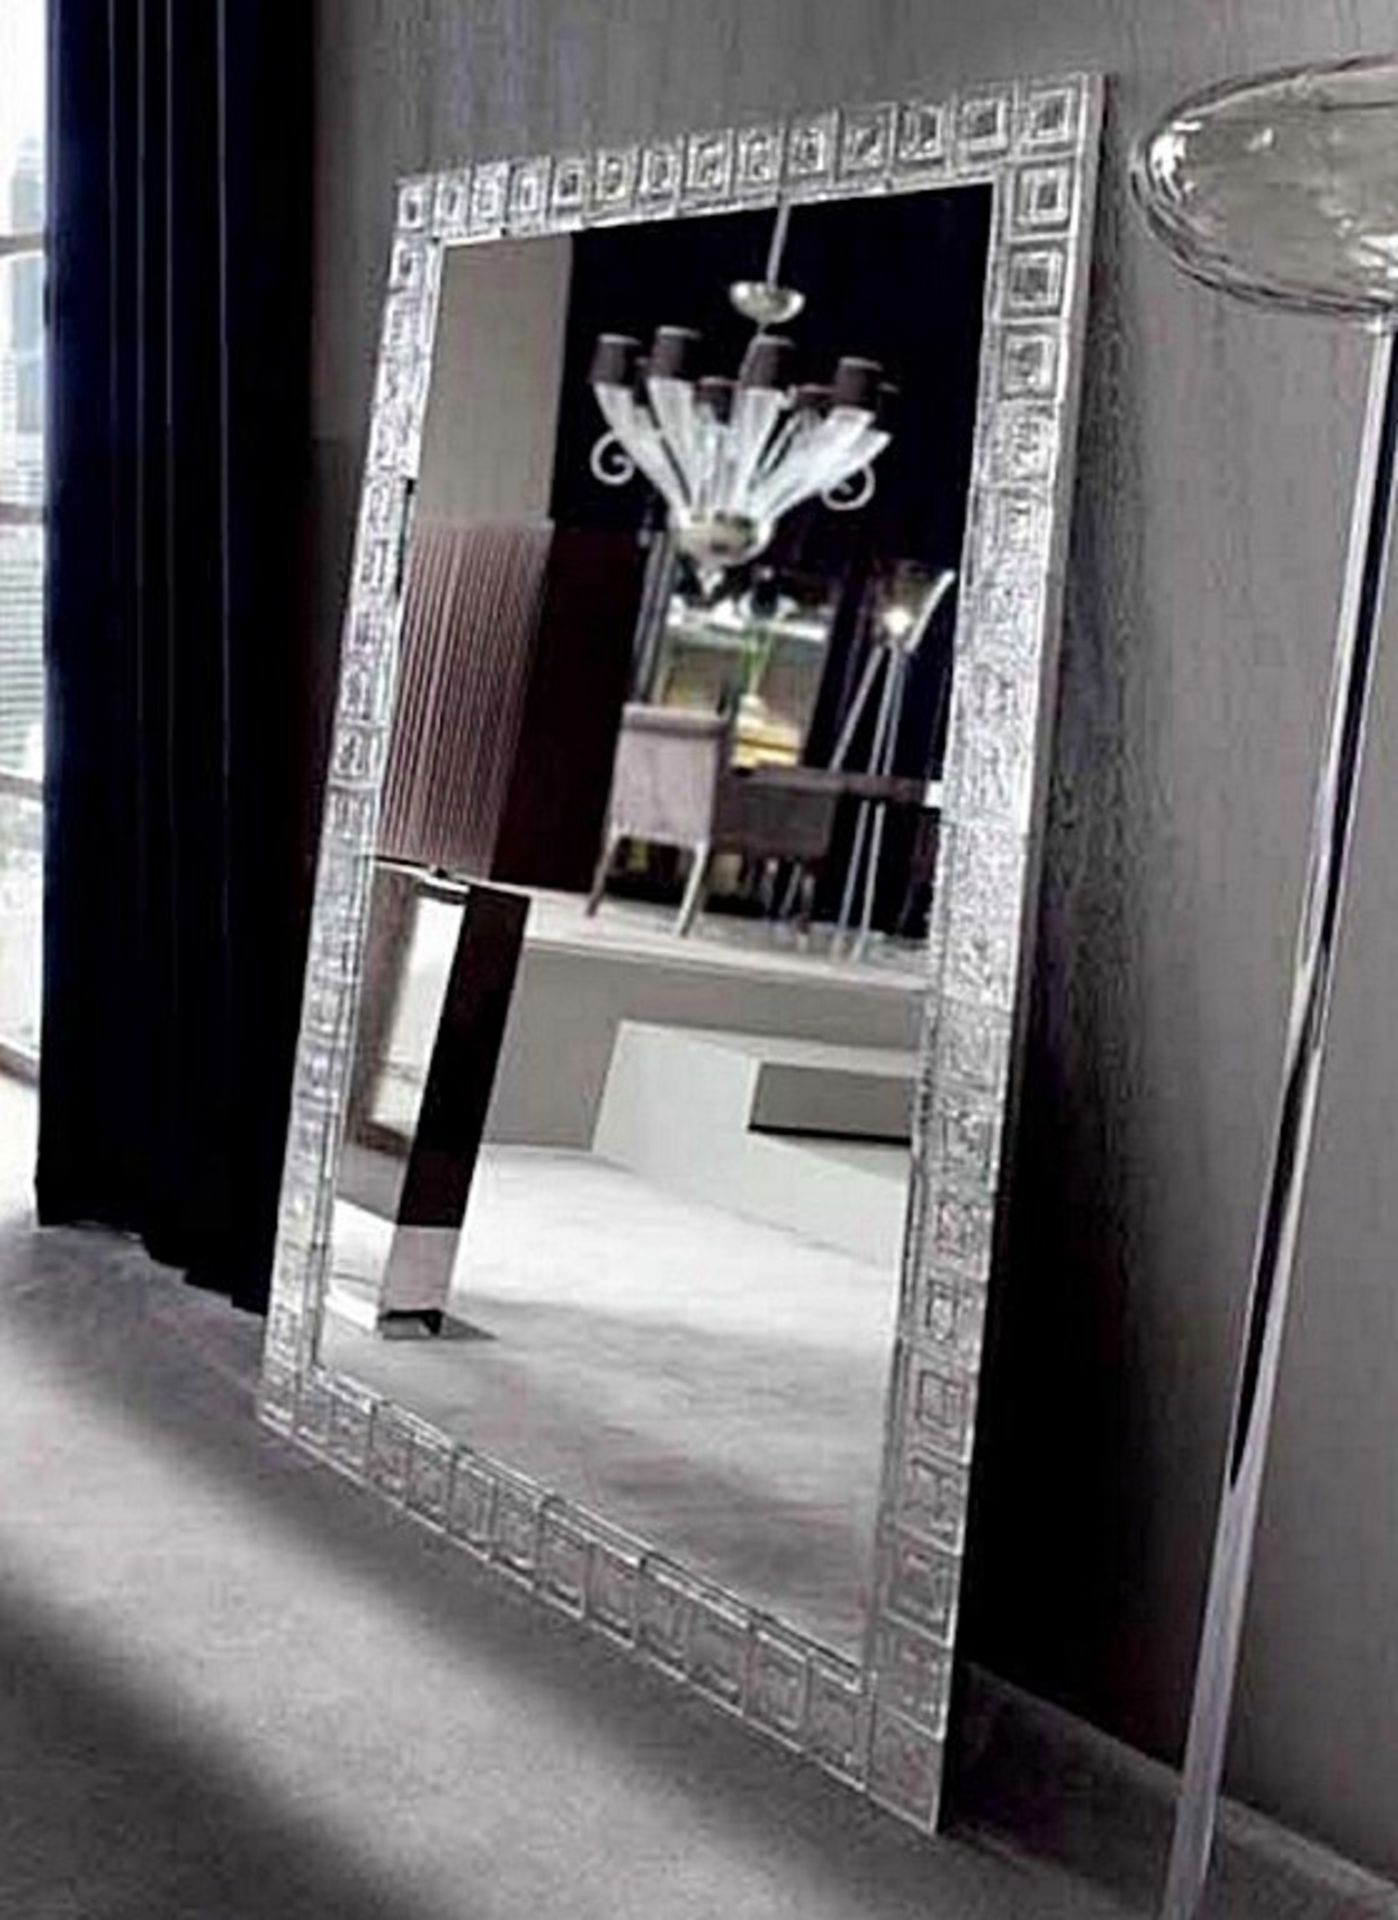 1 x GIORGIO Absolute Murano Floor Mirror - H 200. W 140. D 3 cm - Ref: 3377737 - An Impressive 2